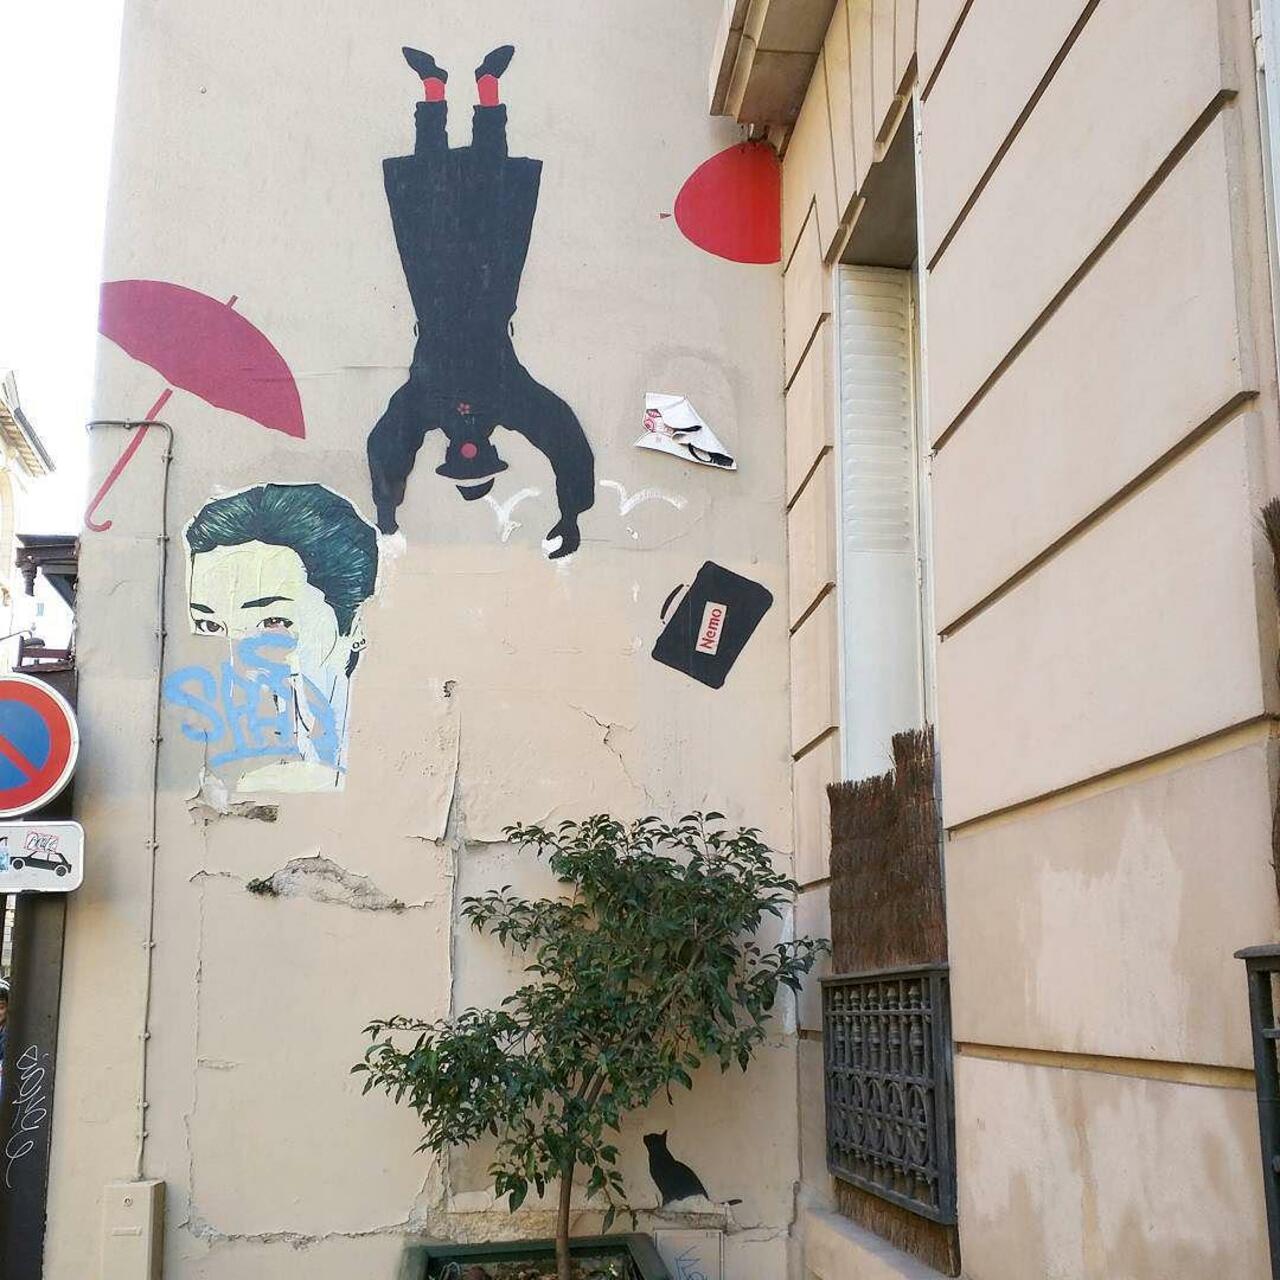 RT @circumjacent_fr: #Paris #graffiti photo by @alphaquadra http://ift.tt/1KYL1eP #StreetArt http://t.co/pKR3hzovv1